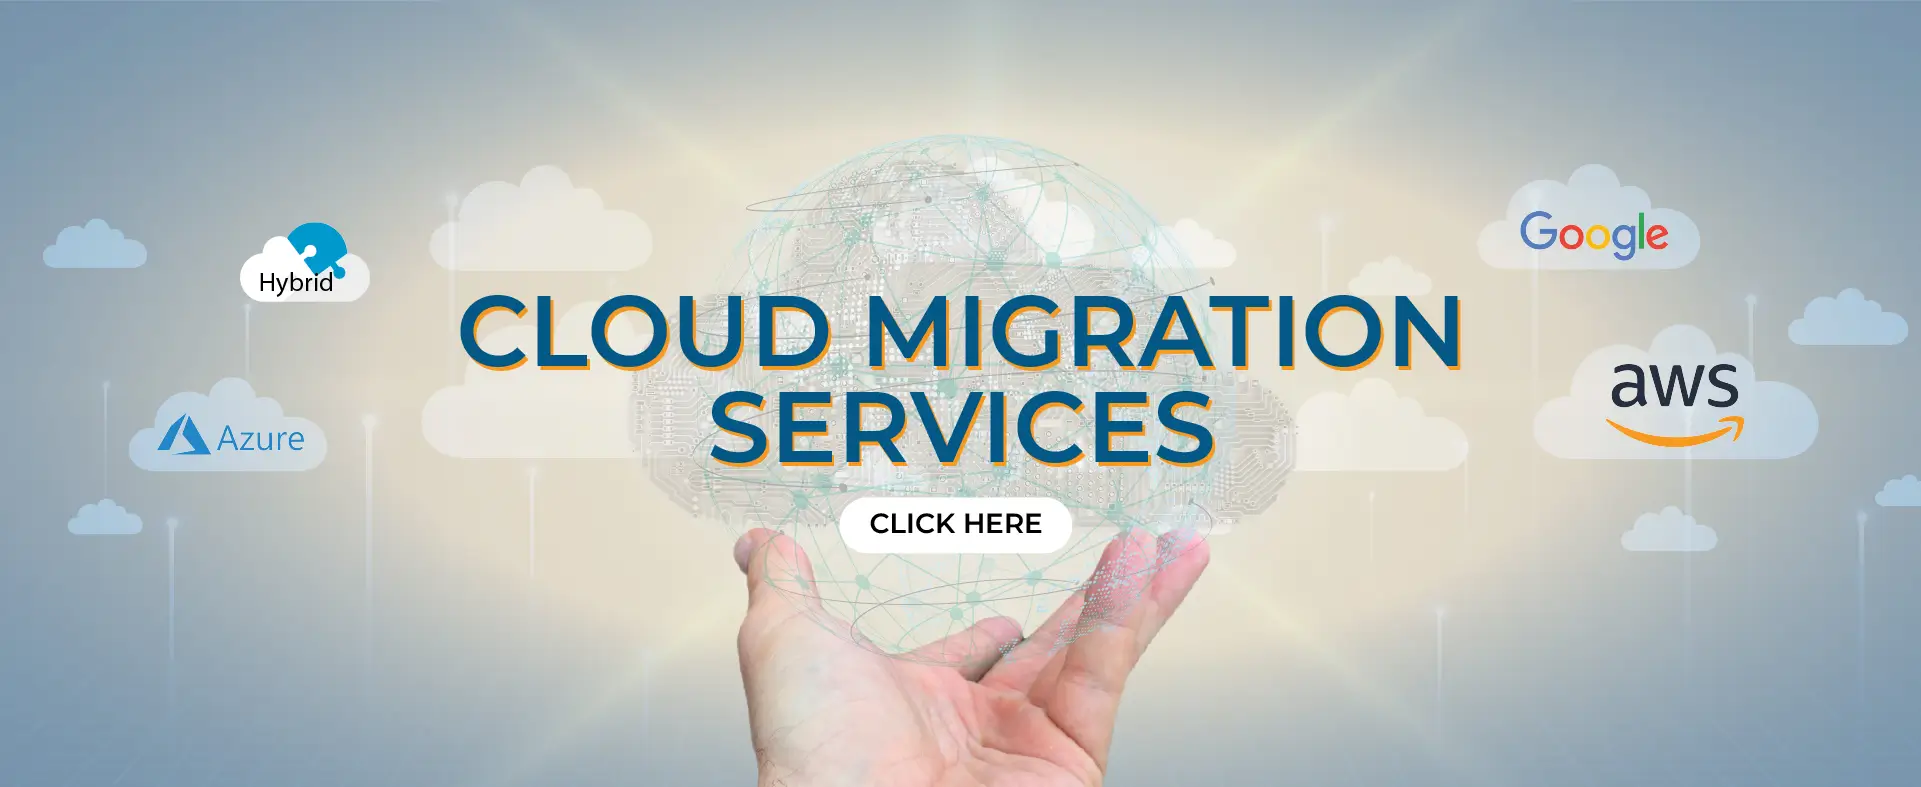 Cloud-migration-banner.webp